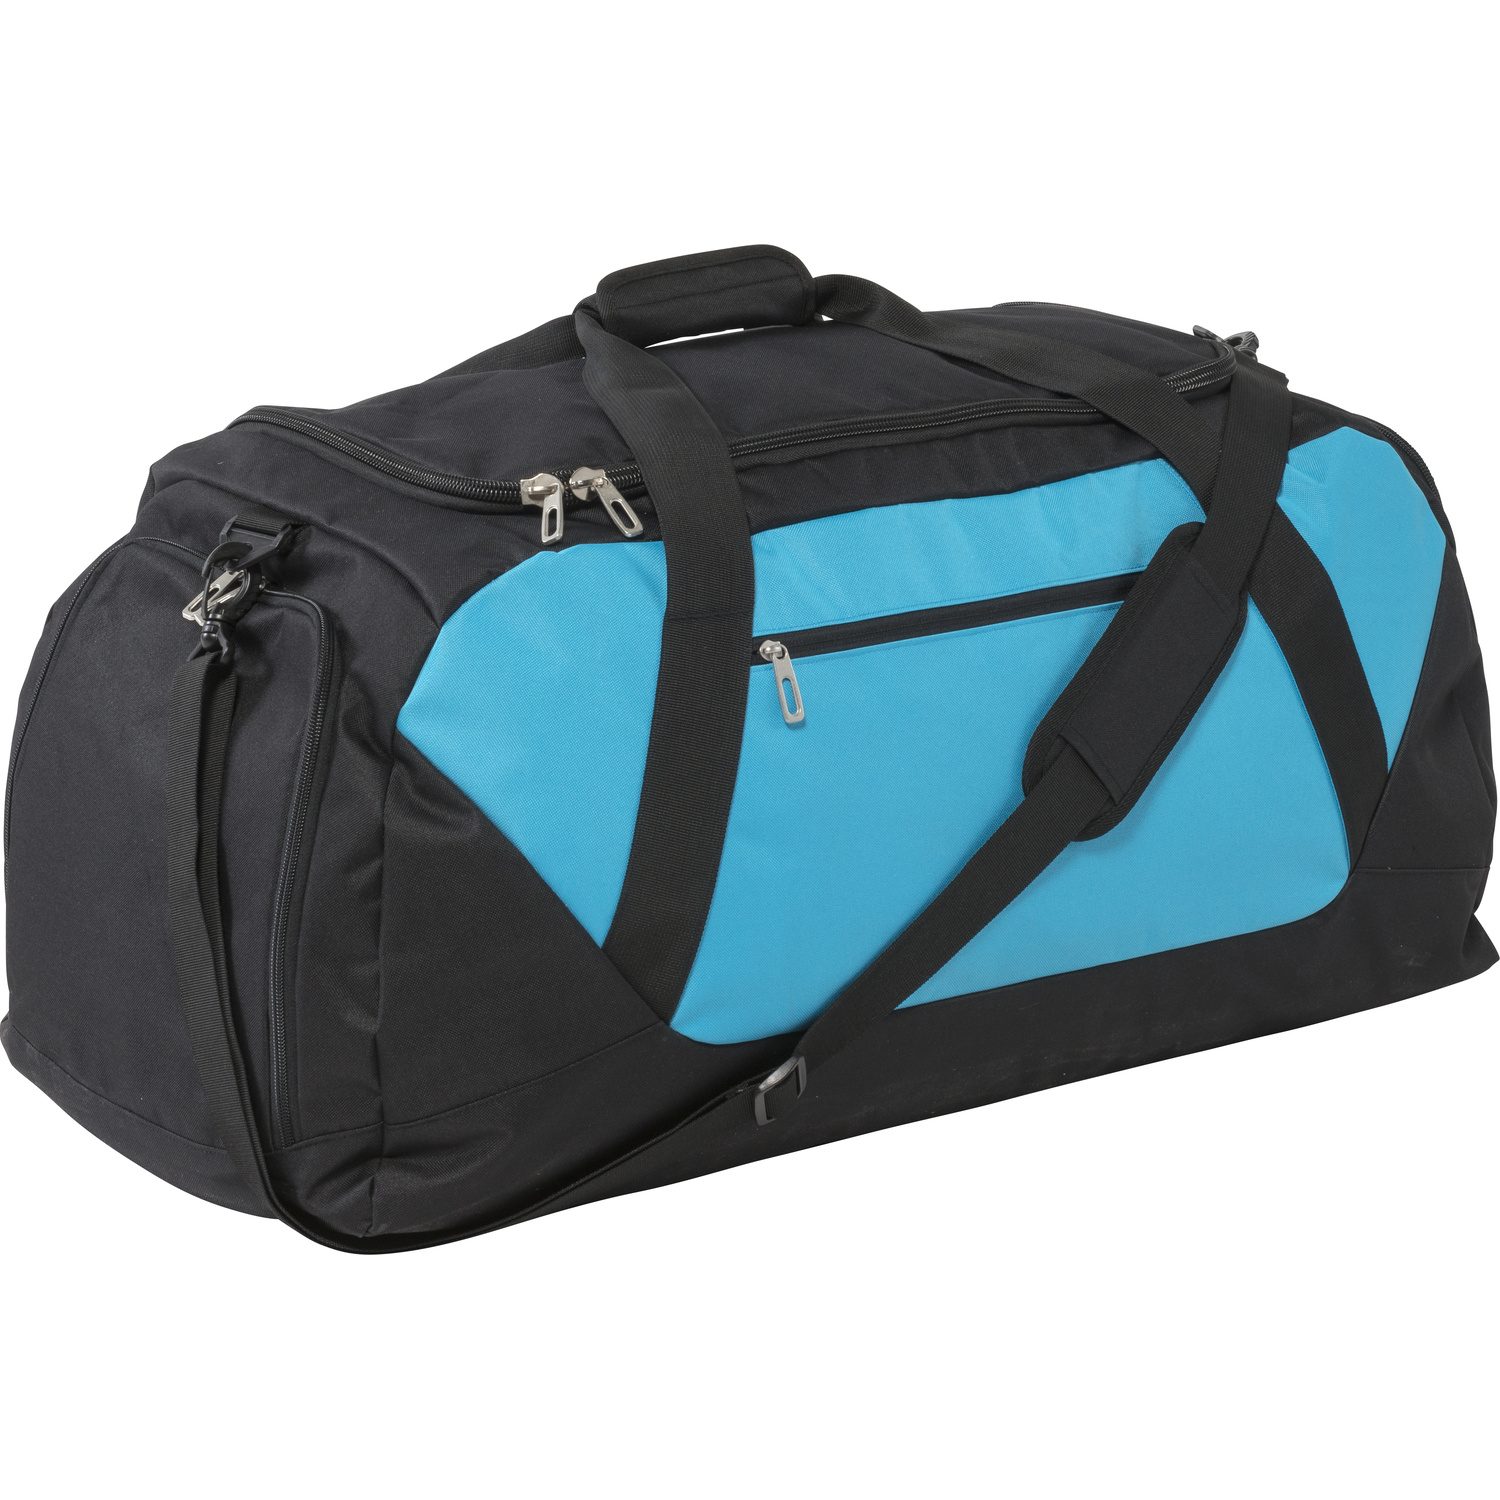 007947 980999999 3d135 lft pro01 fal - Large sports/travel bag